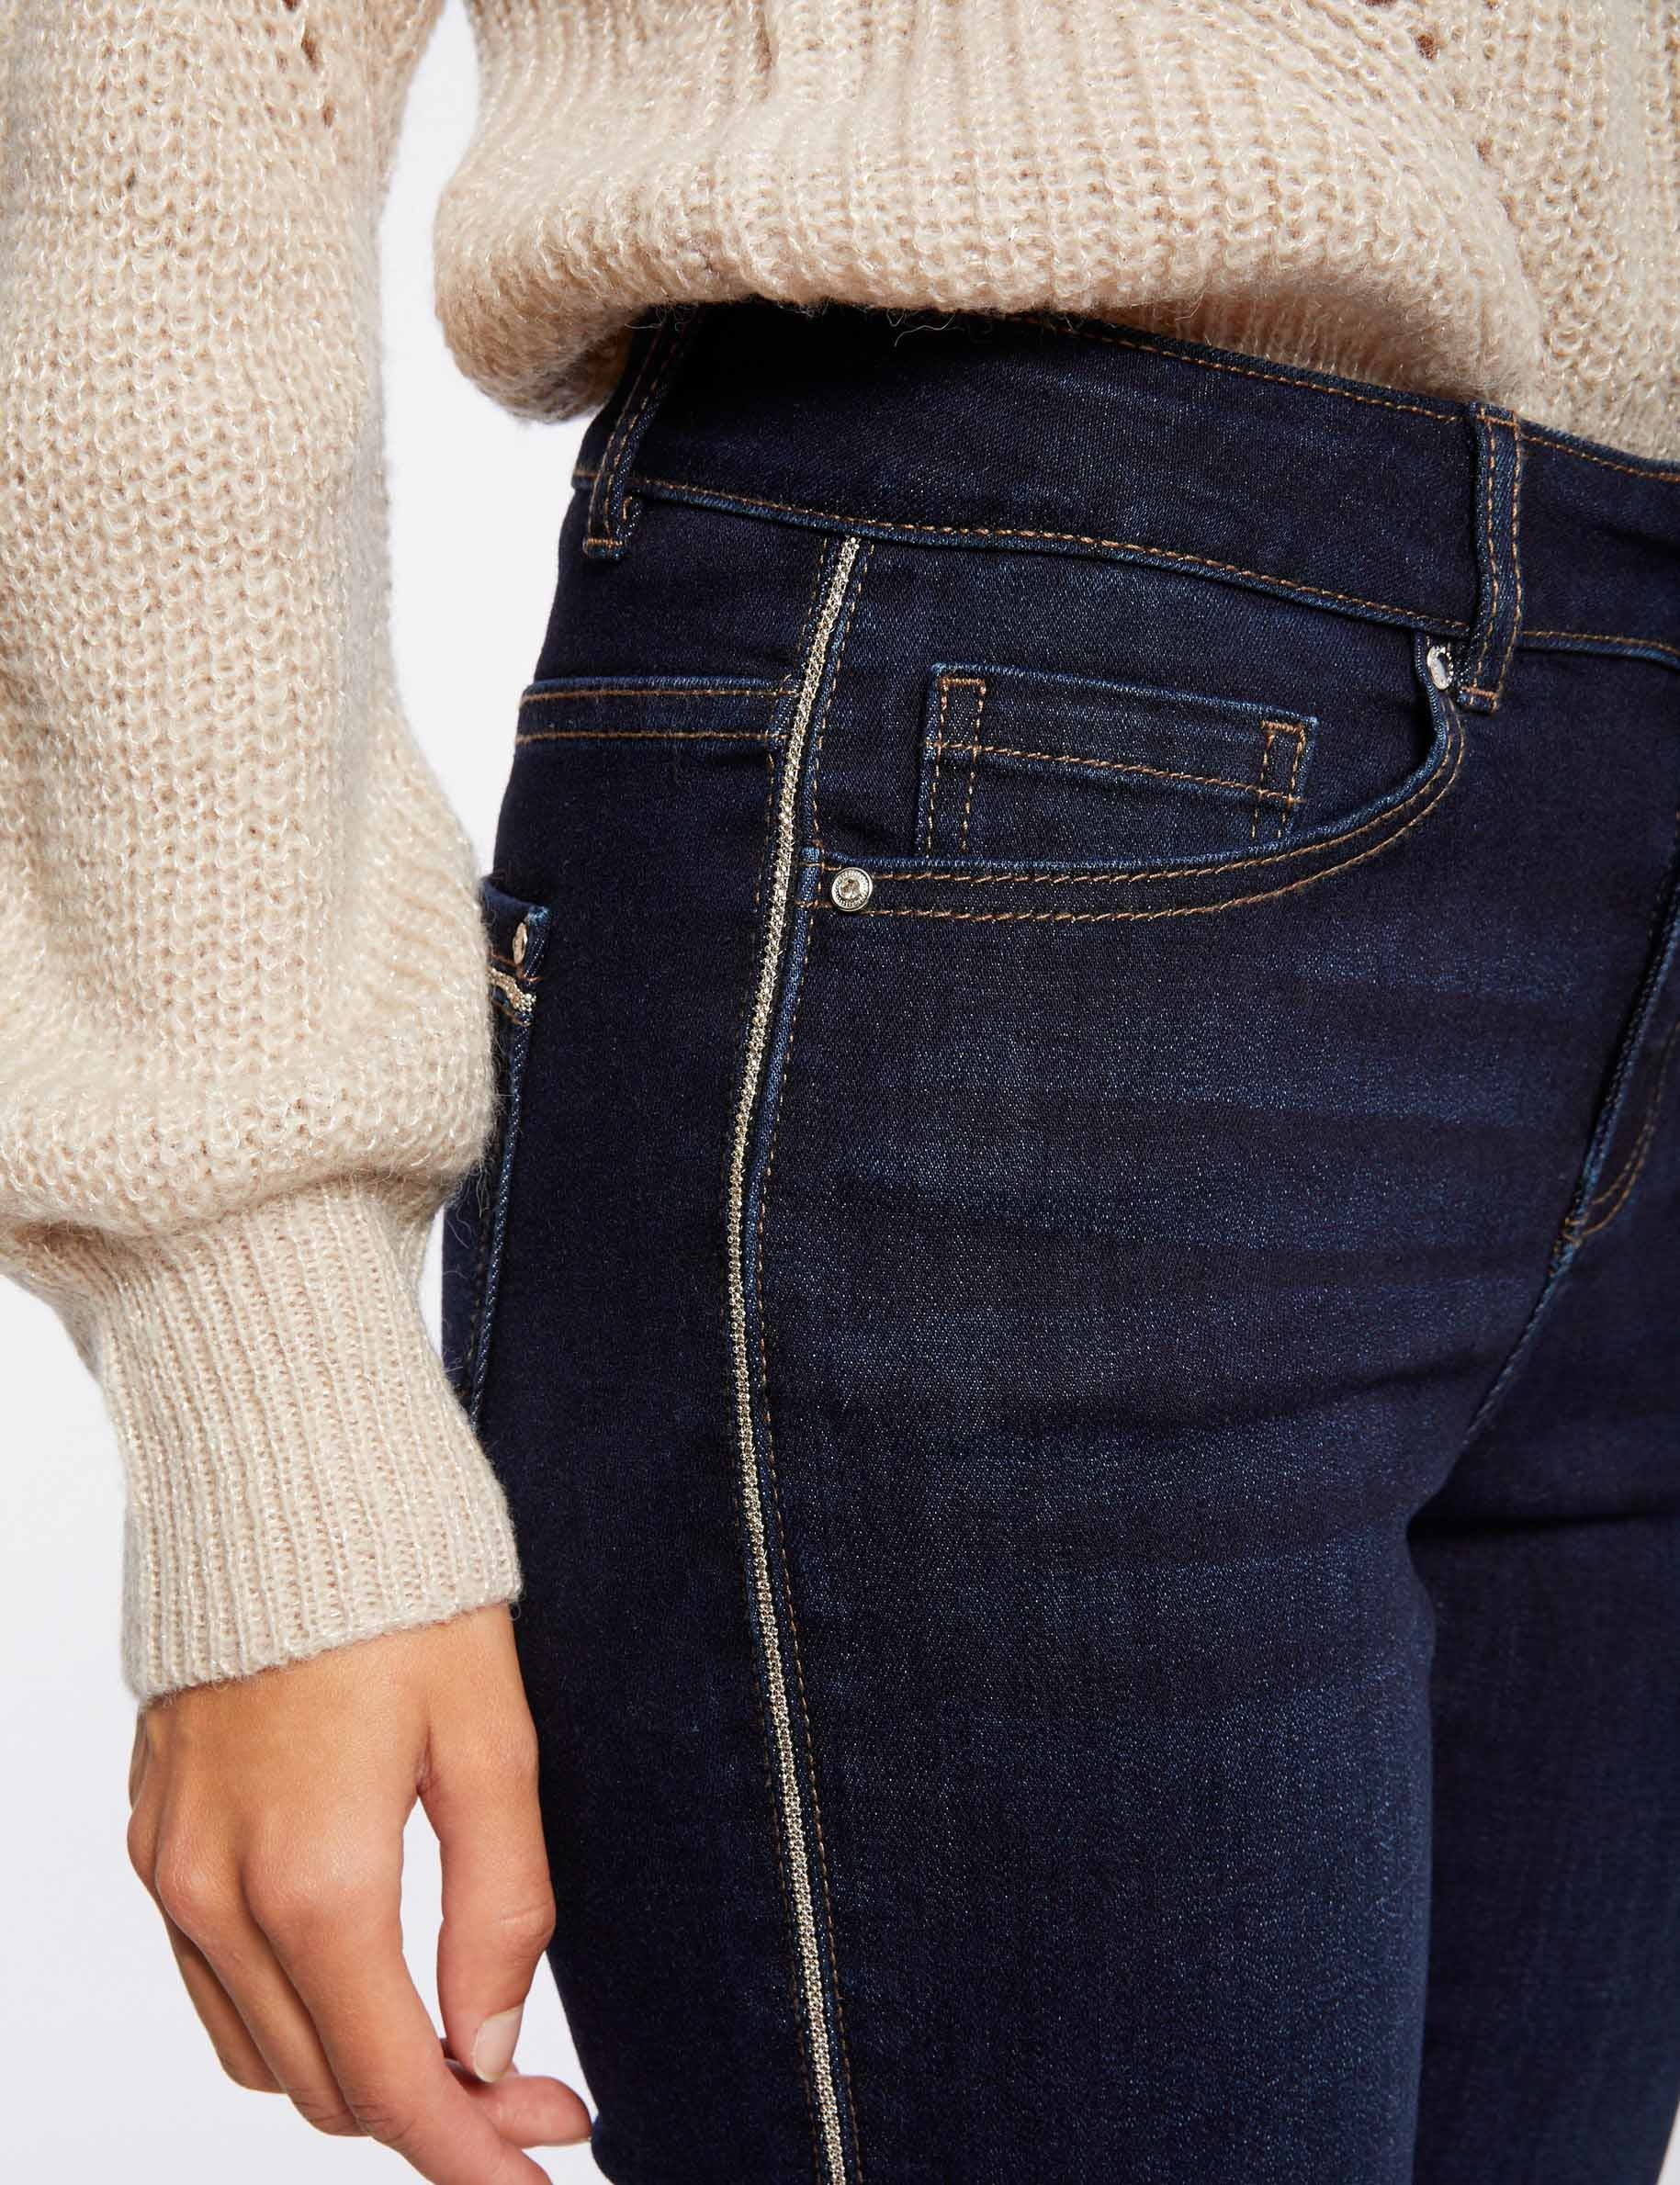 Slim jeans with rhinestones strips raw denim ladies'